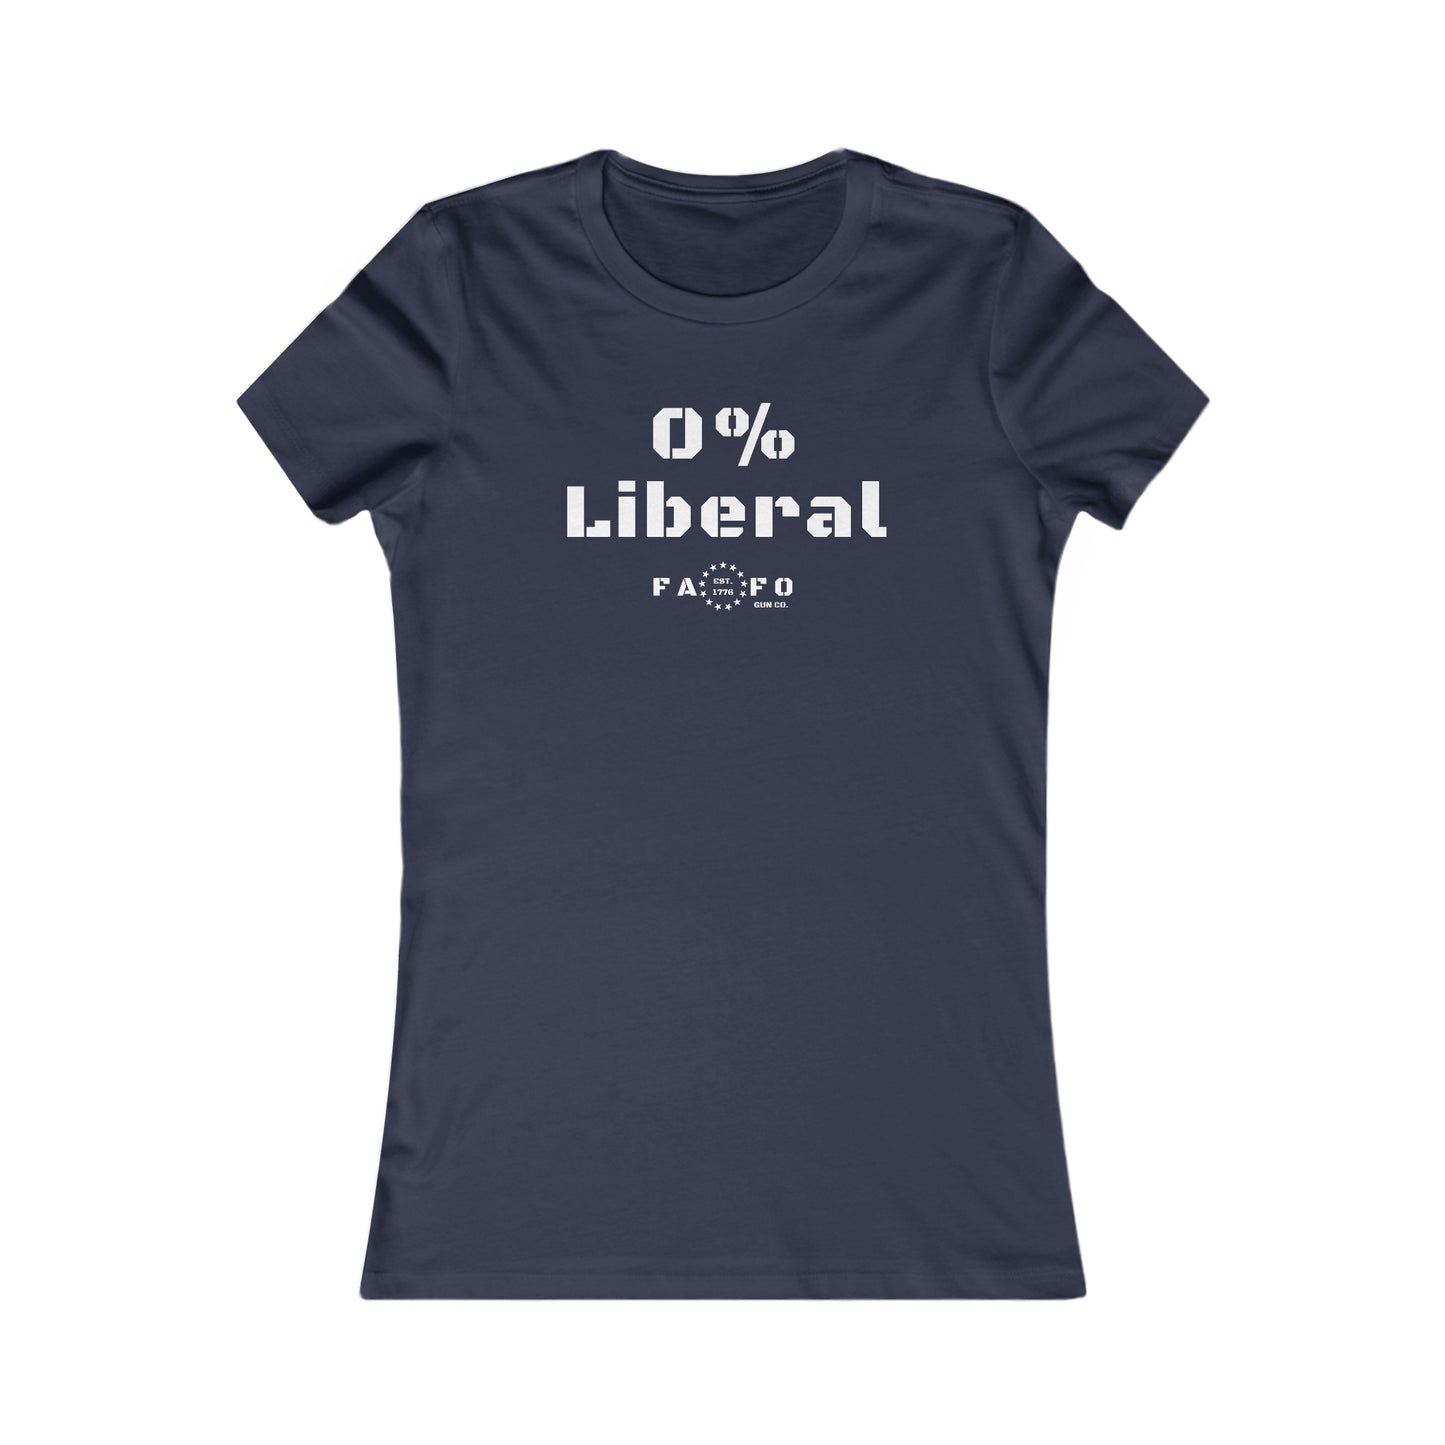 Women's "0% Liberal" Tee